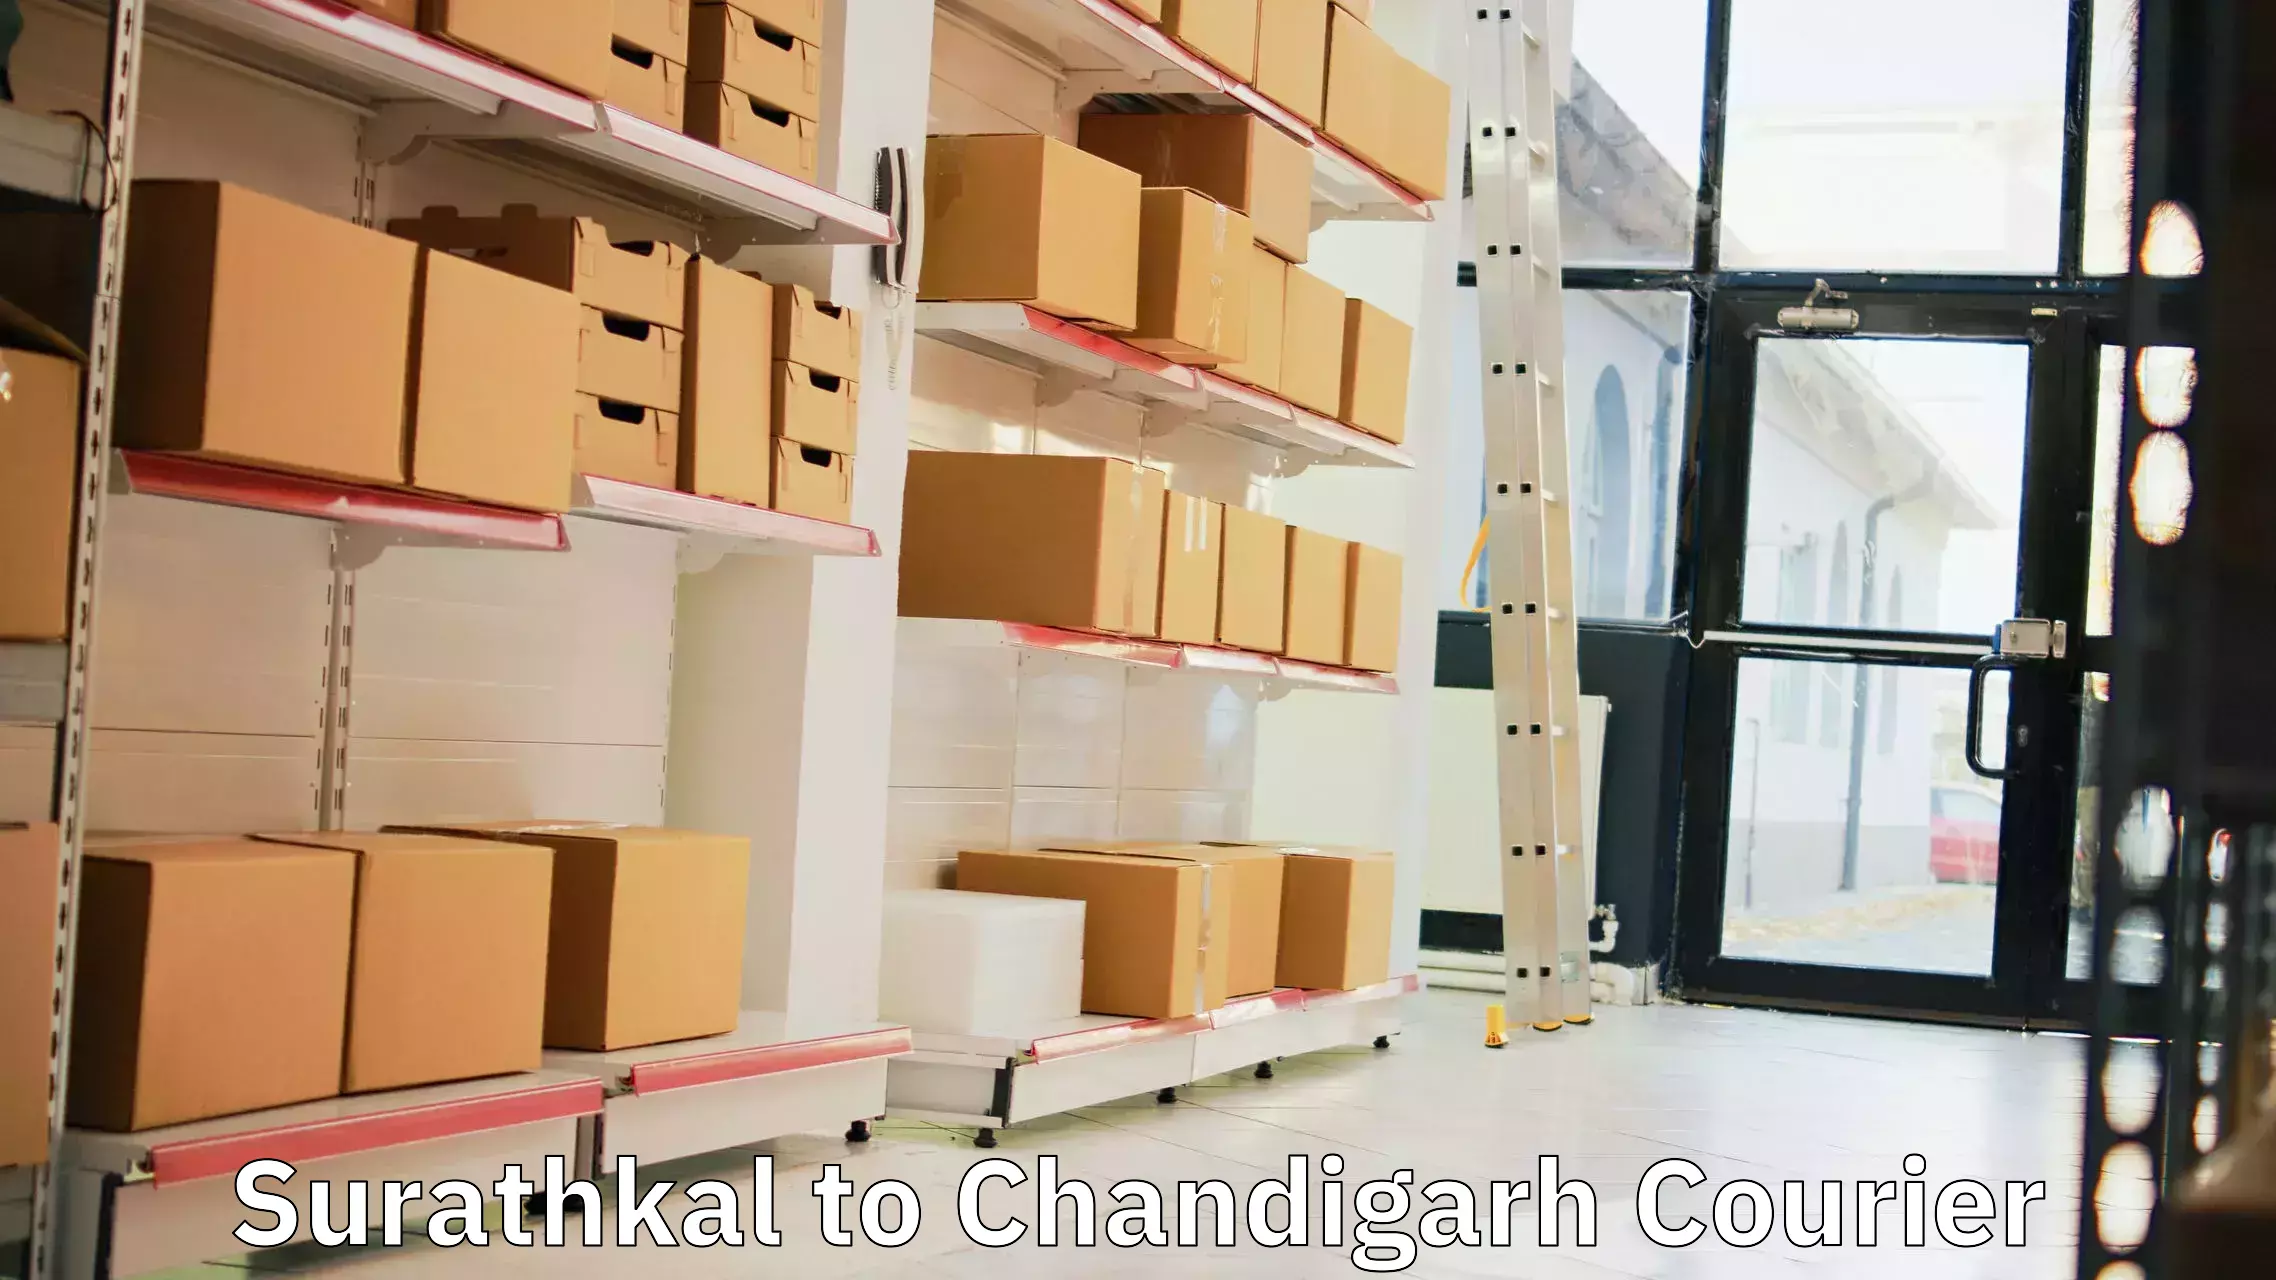 Supply chain efficiency Surathkal to Chandigarh